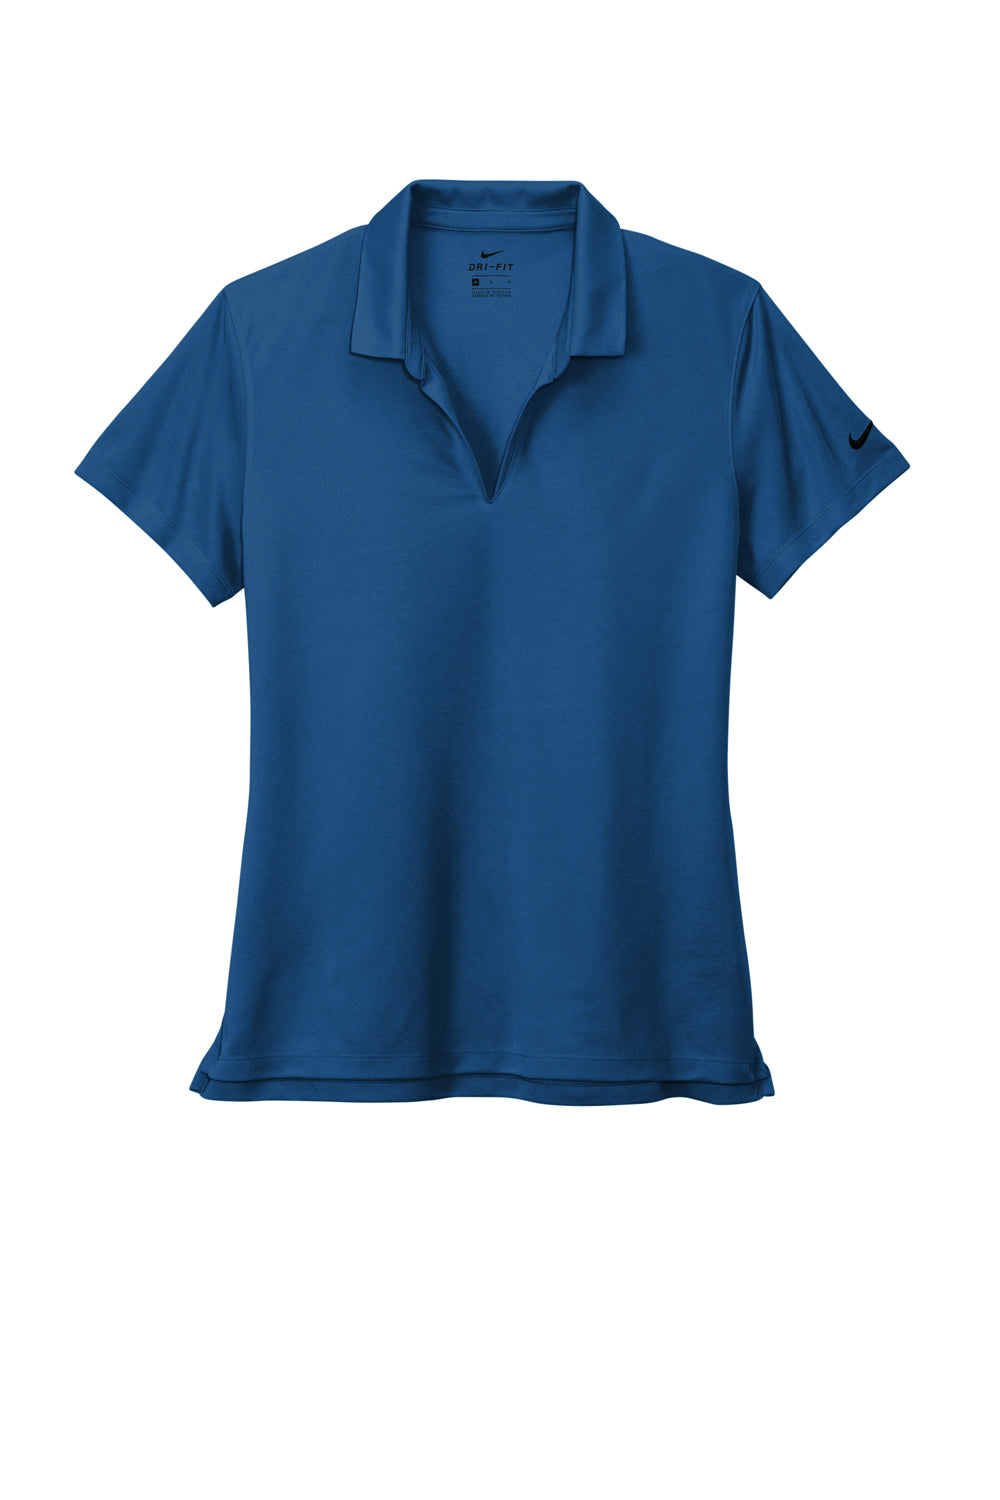 Nike NKDC1991 Womens Dri-Fit Moisture Wicking Micro Pique 2.0 Short Sleeve Polo Shirt Gym Blue Flat Front